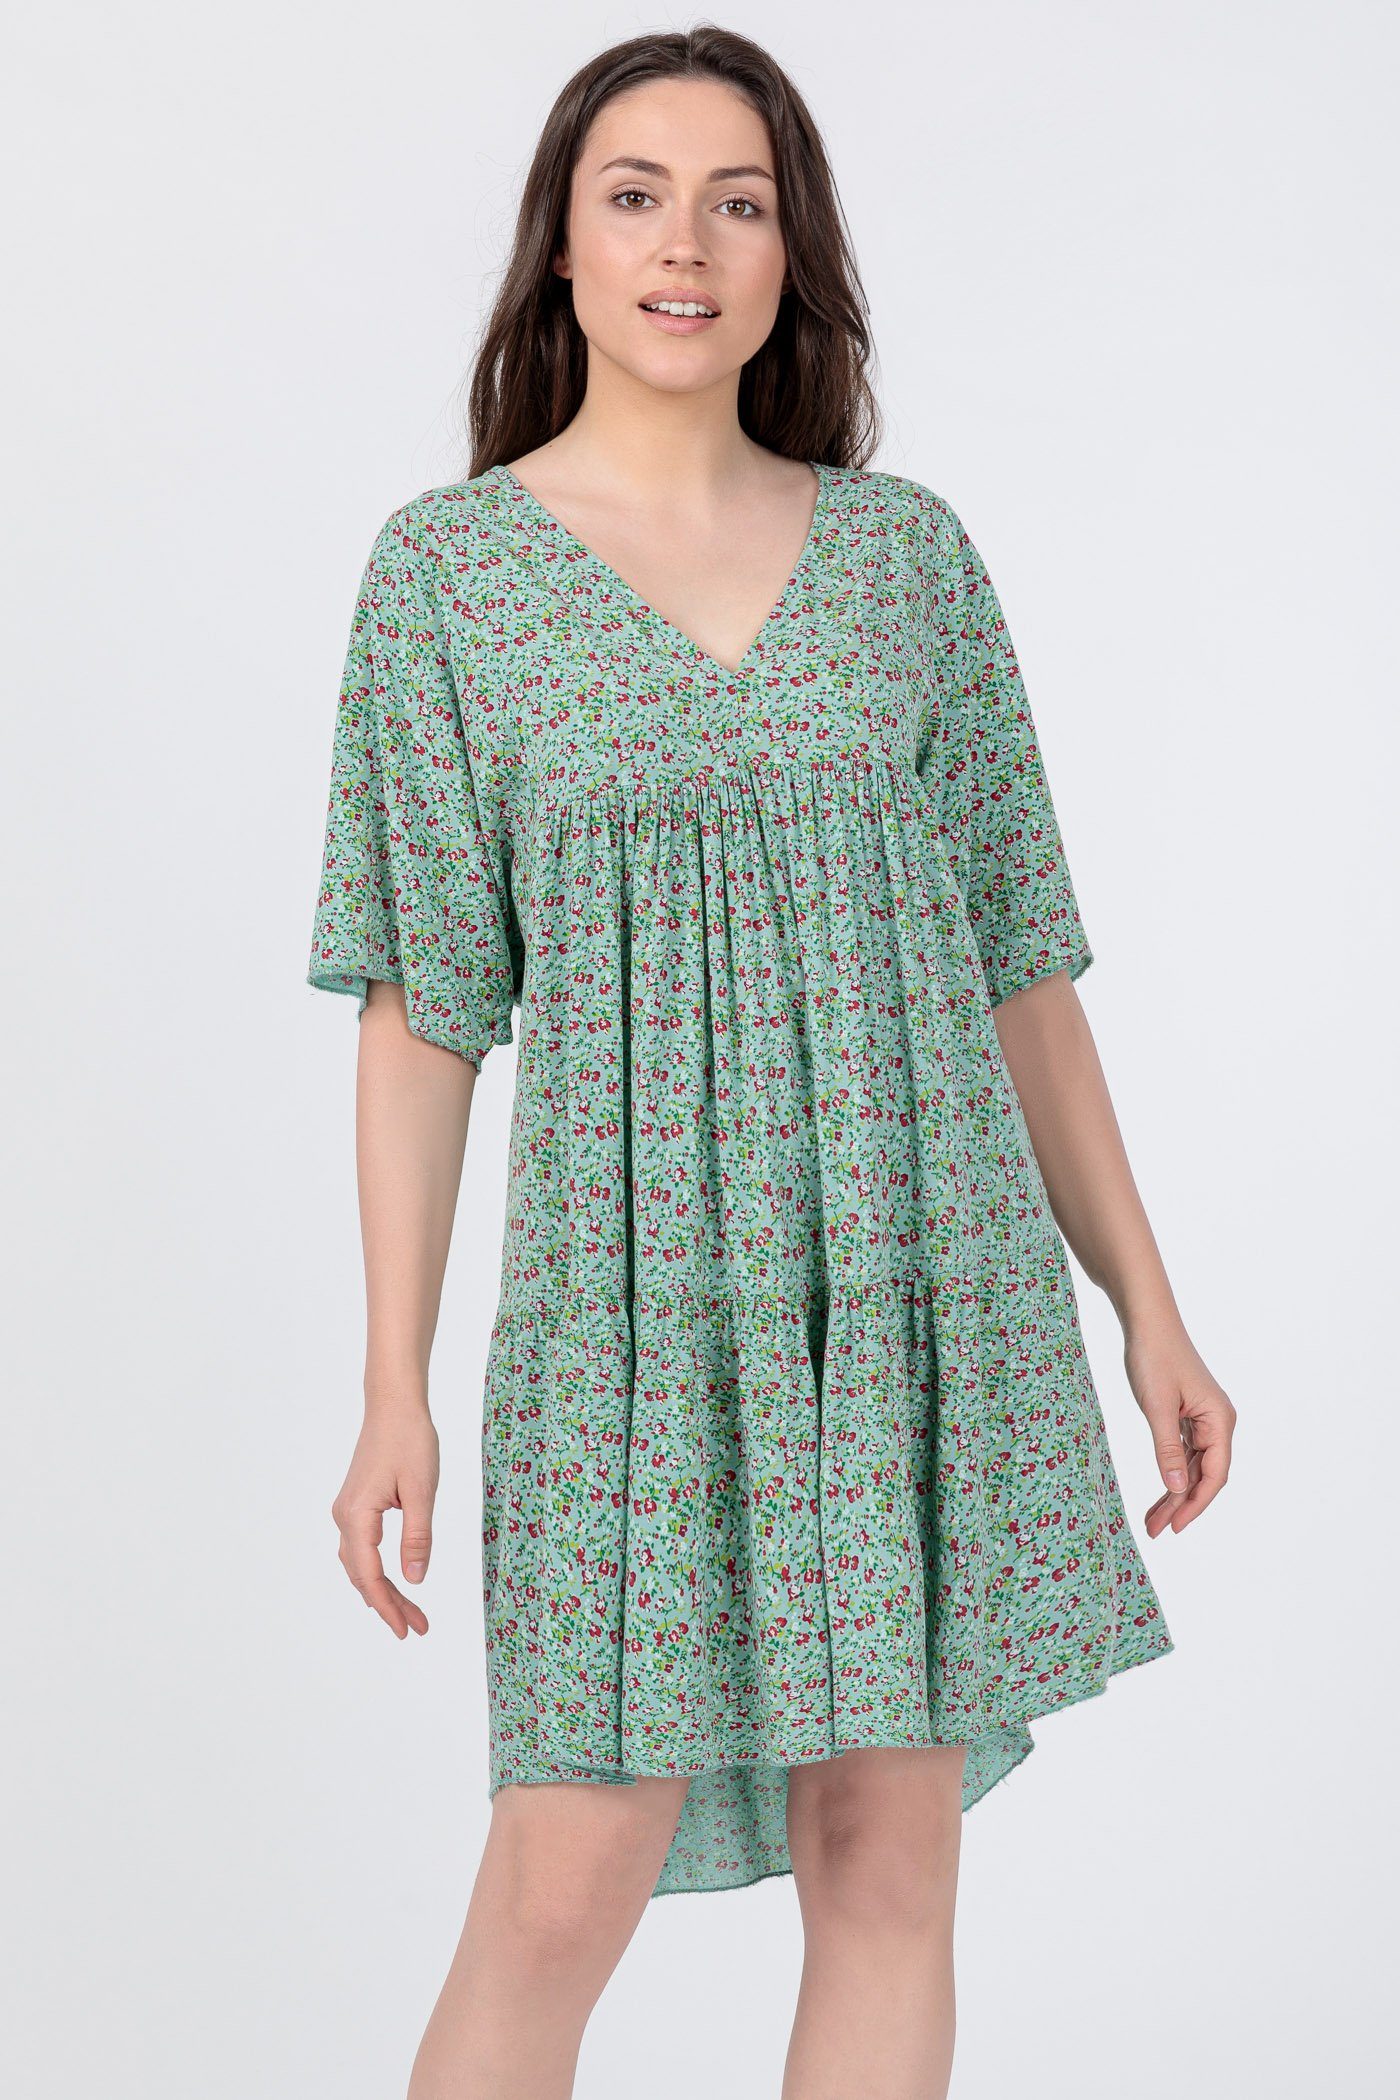 PEKIVESSA Sommerkleid »Boho-Kleid Damen kurz luftig geblümt« Tunika-Kleid  Oversize online kaufen | OTTO